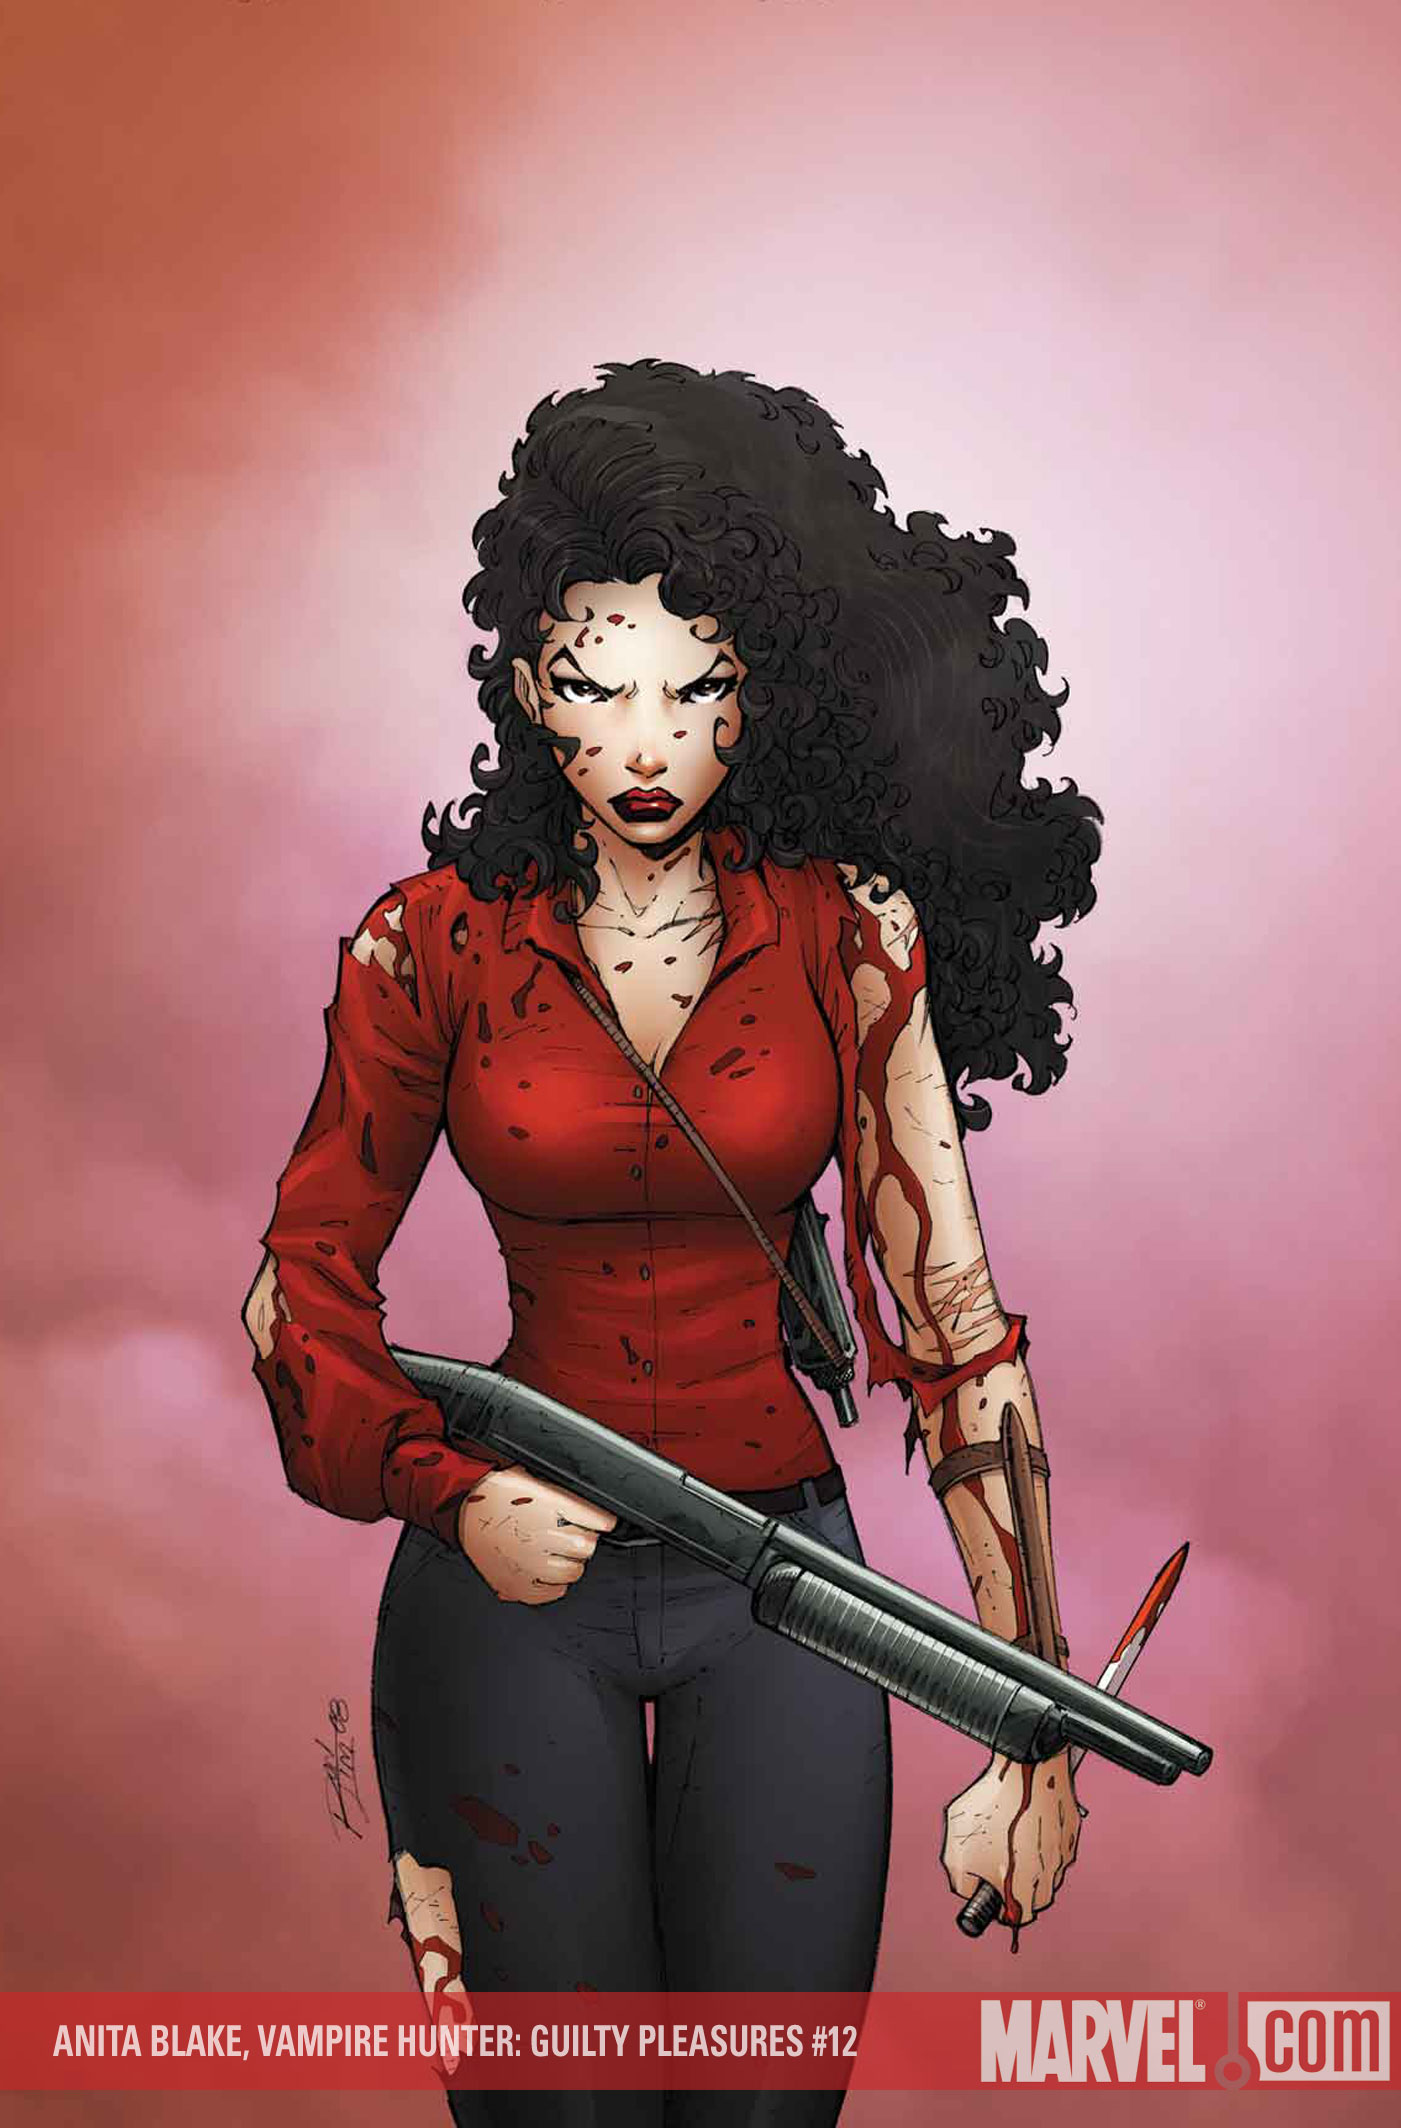 Anita Blake: Vampire Hunter #4